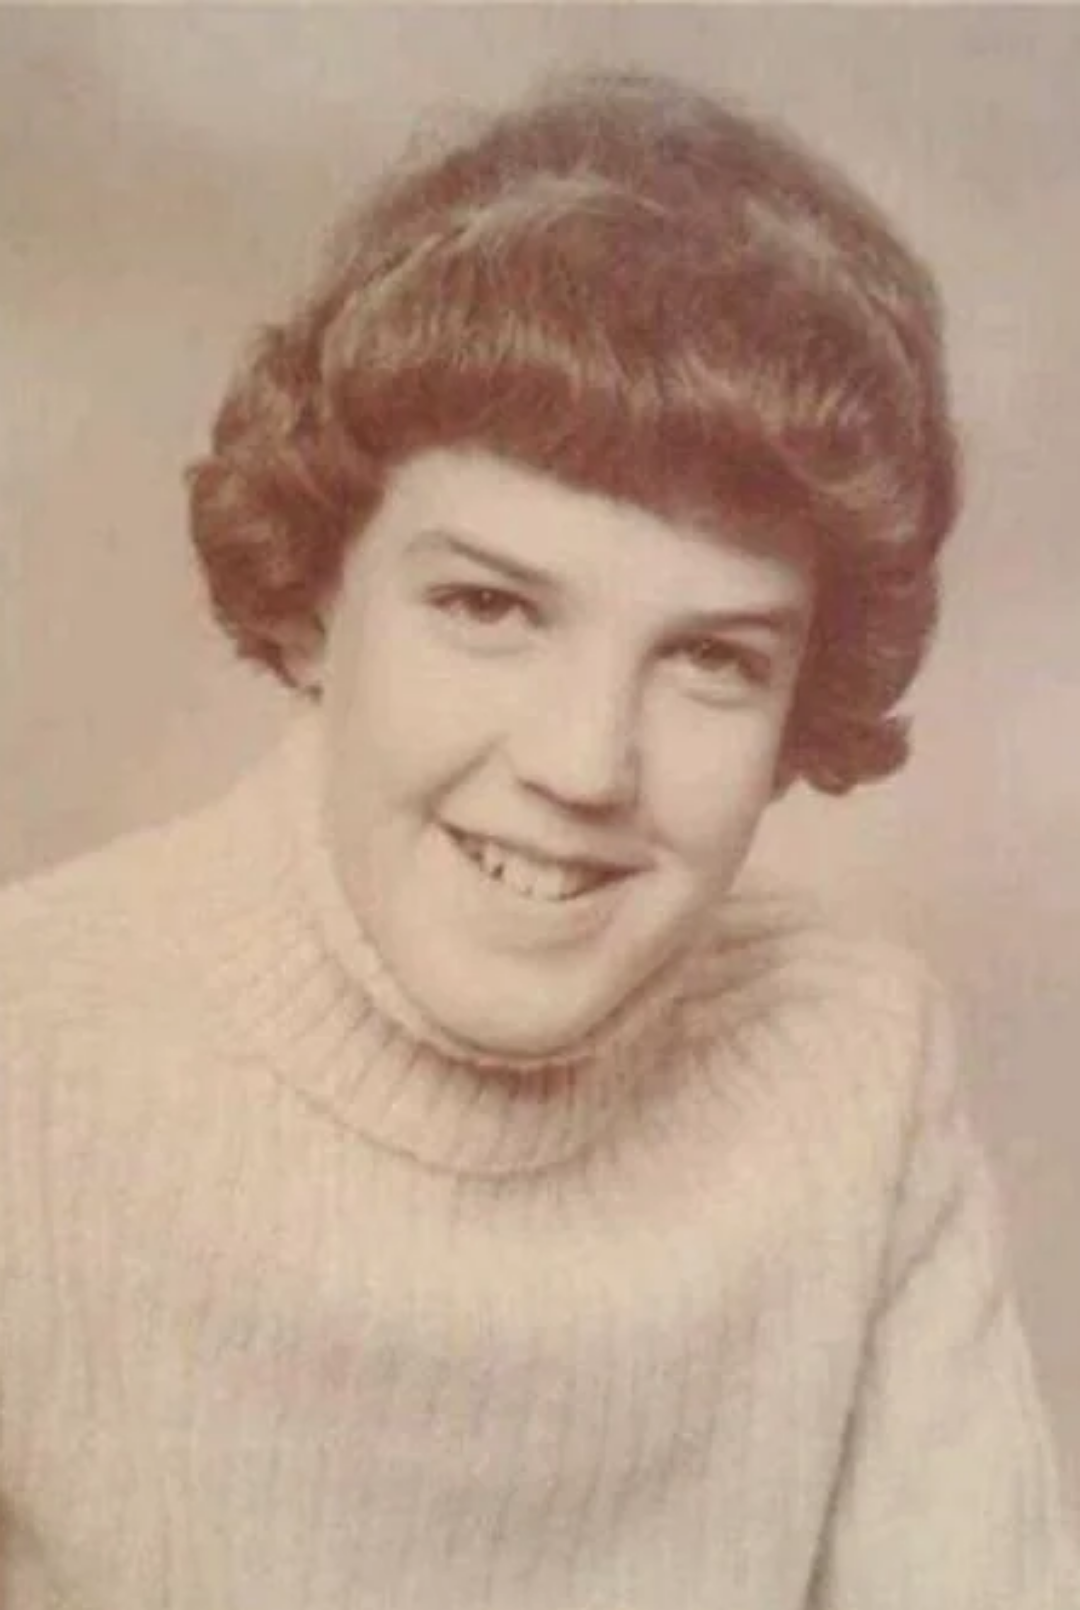 2009 Britain's Got Talent winner Susan Boyle in high school, 1975